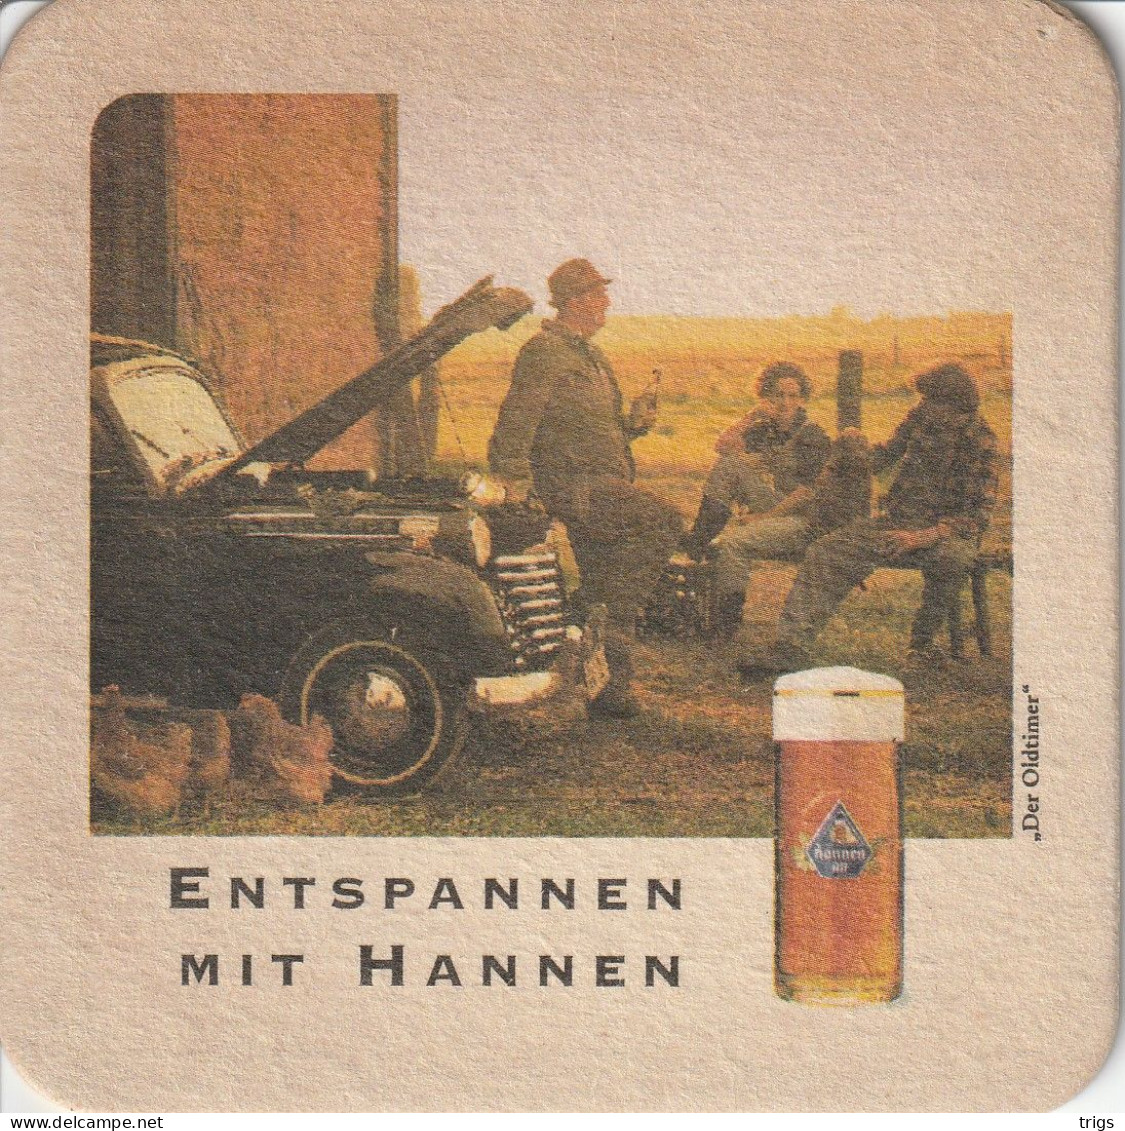 Hannen Alt - Beer Mats